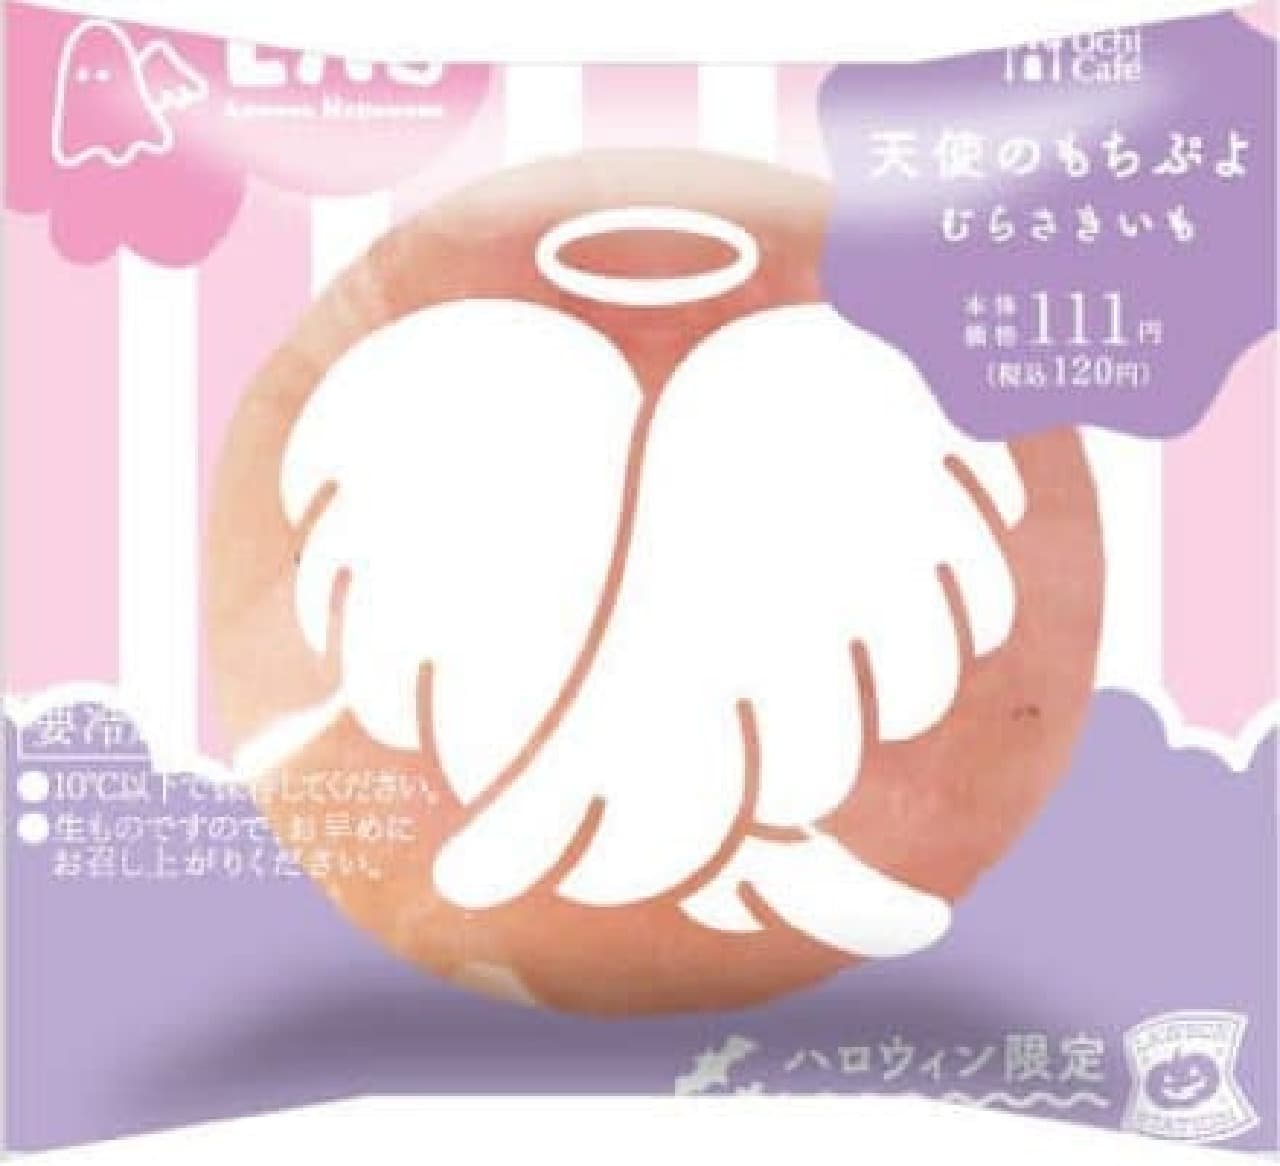 Lawson "Uchi Cafe Angel's Mochipuyo (Murasakiimo)"